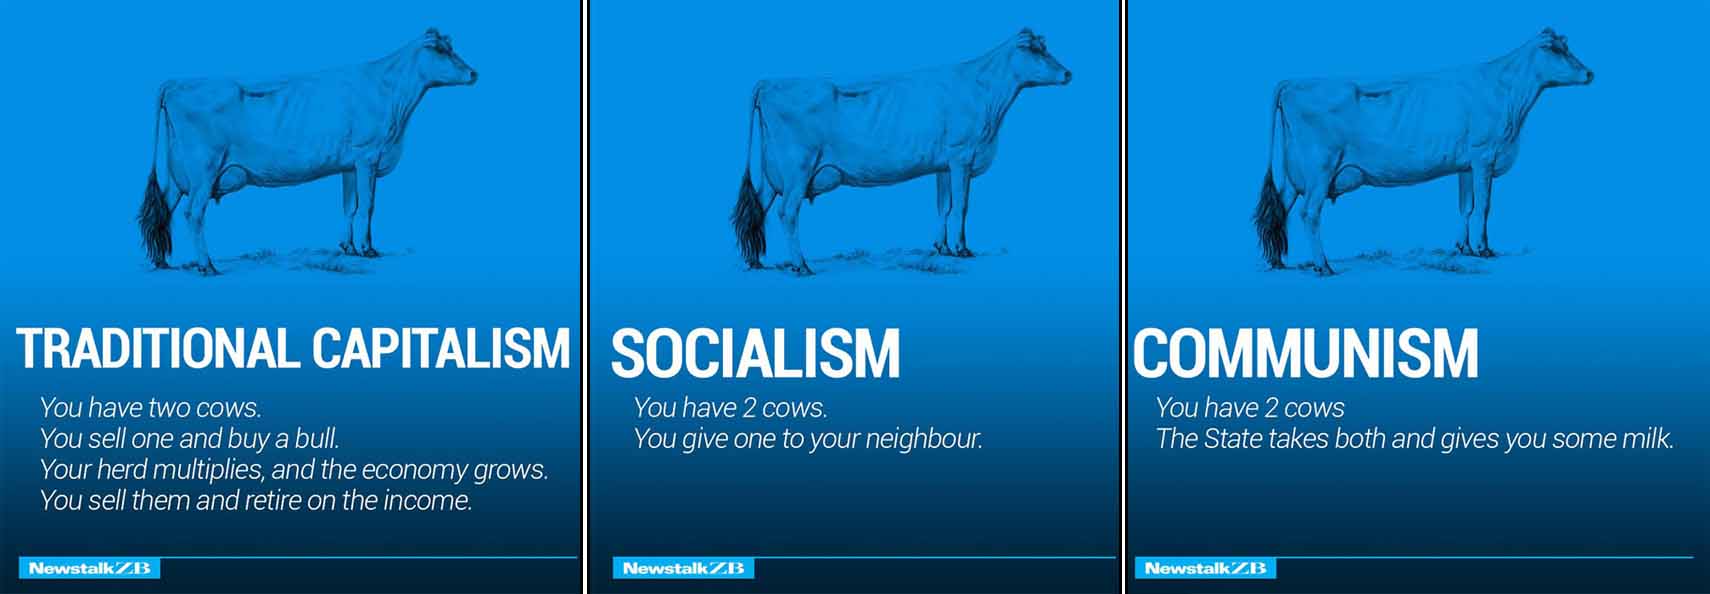 cows economic system